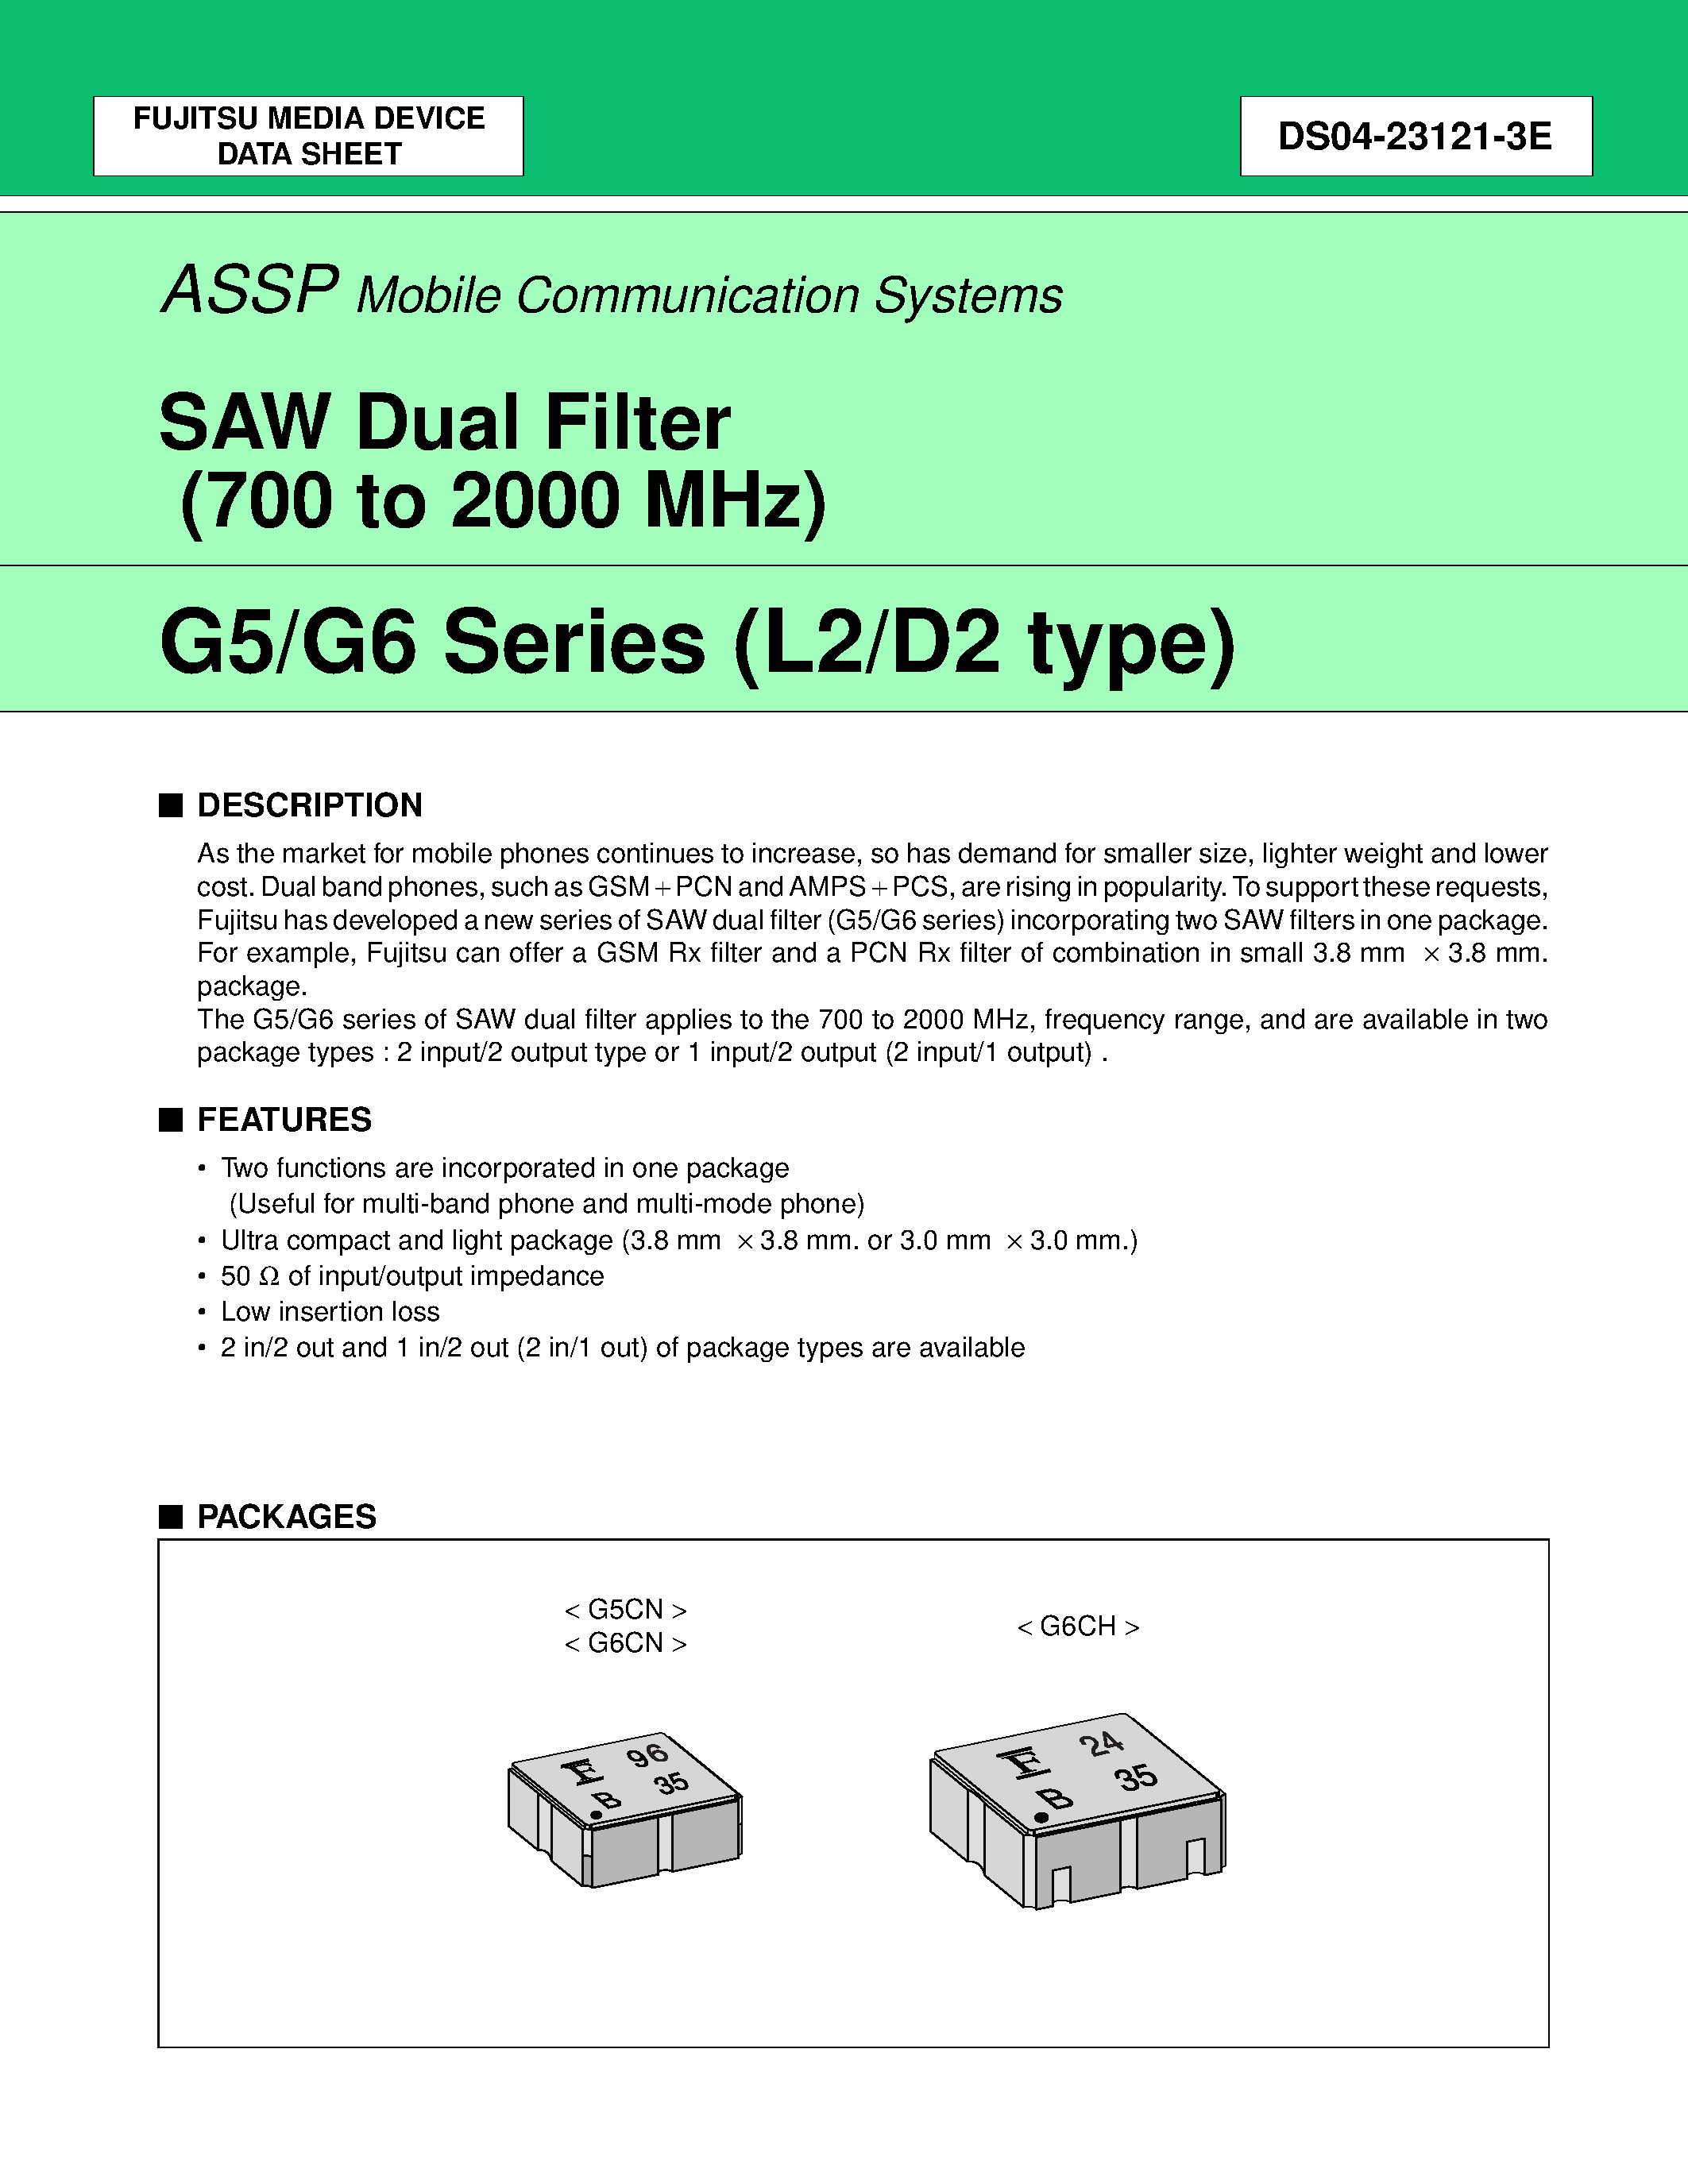 Даташит FAR-G5CN-942M50-D294-U - SAW Dual Filter (700 to 2000 MHz) страница 1